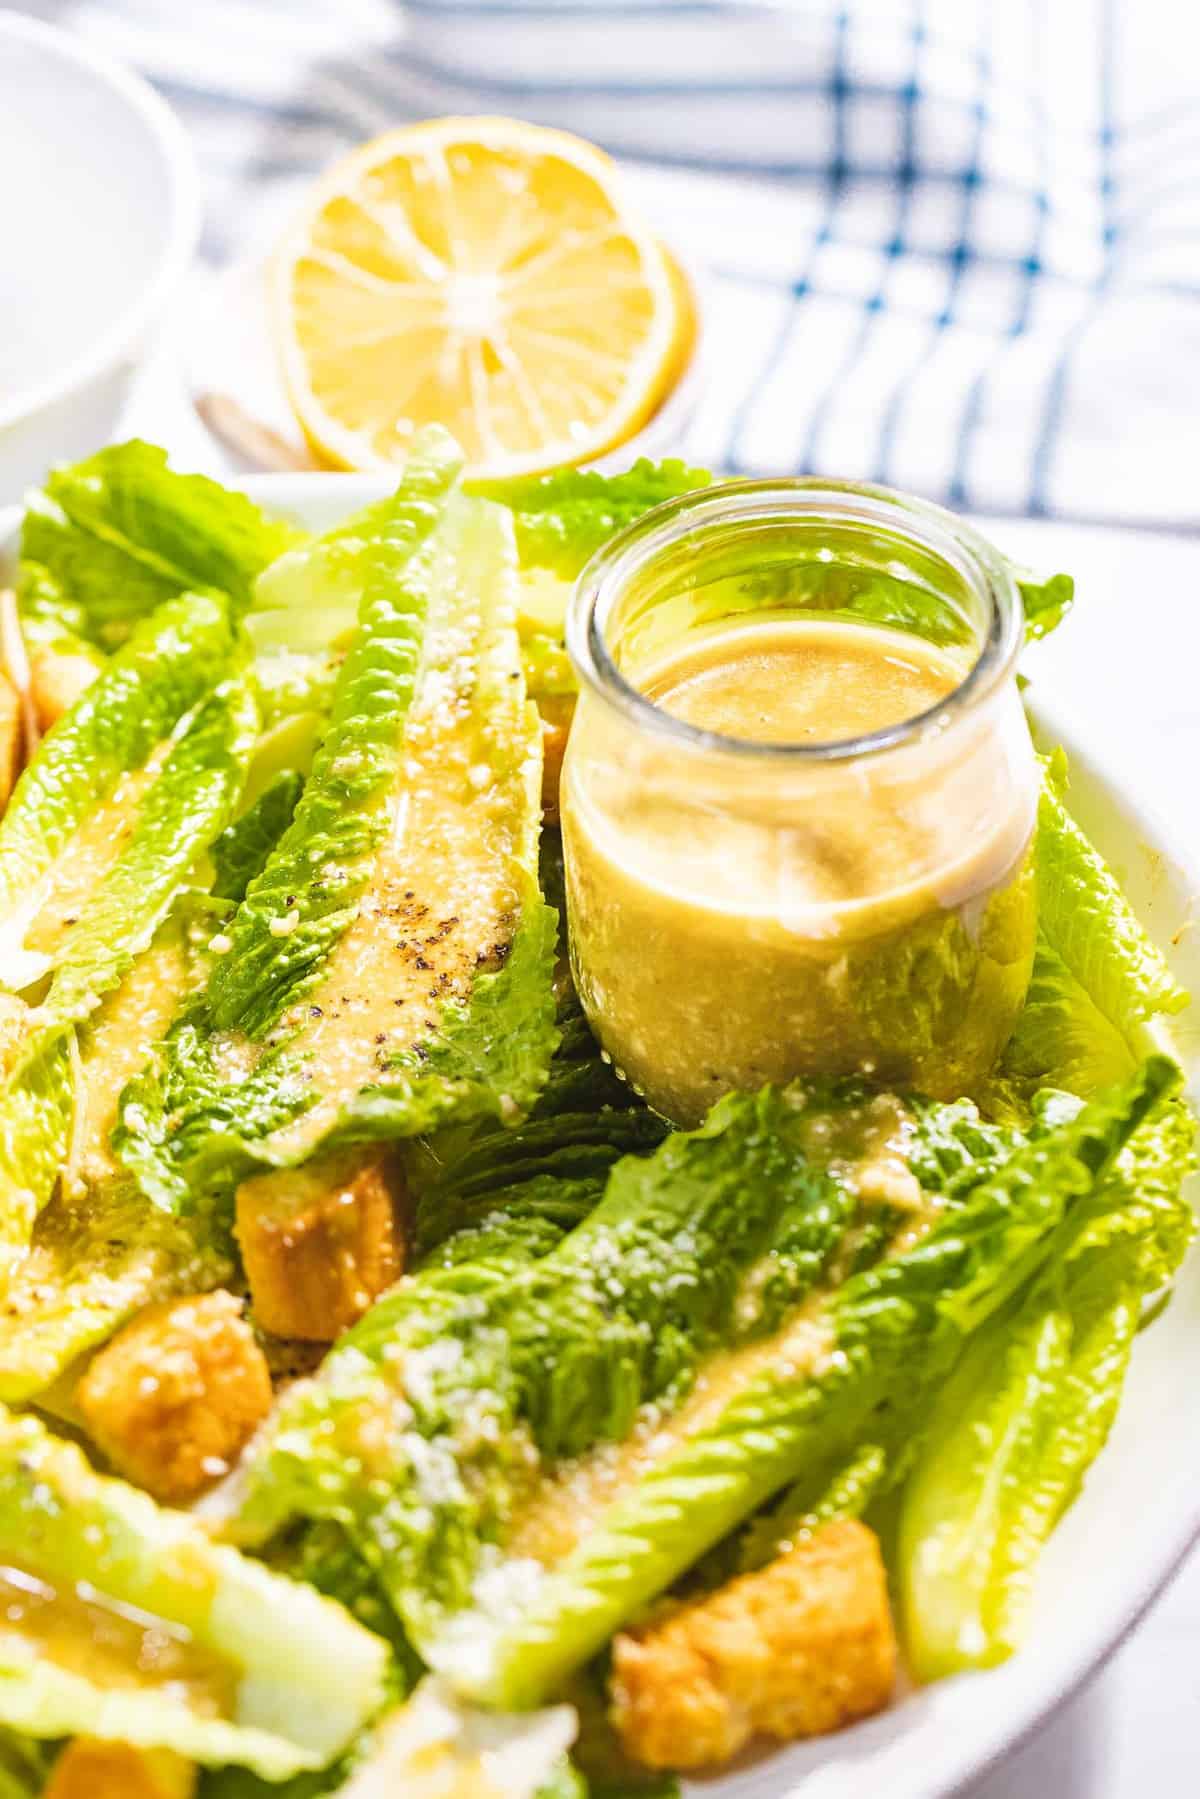 Homemade Caesar salad dressing next to romaine lettuce, croutons, and lemon.